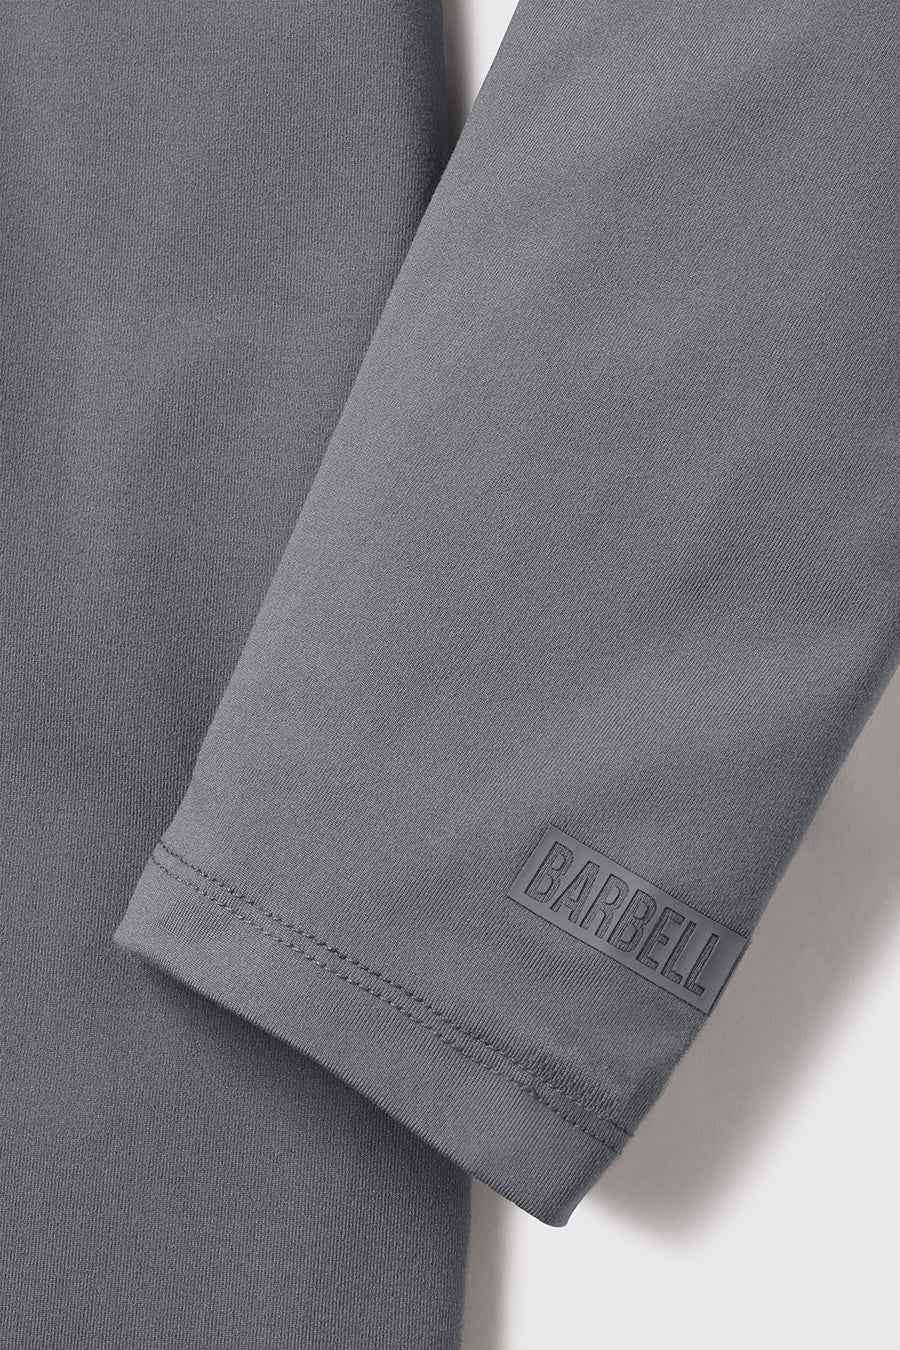 Havok Long Sleeve - Slate - photo from cuff detail #color_slate